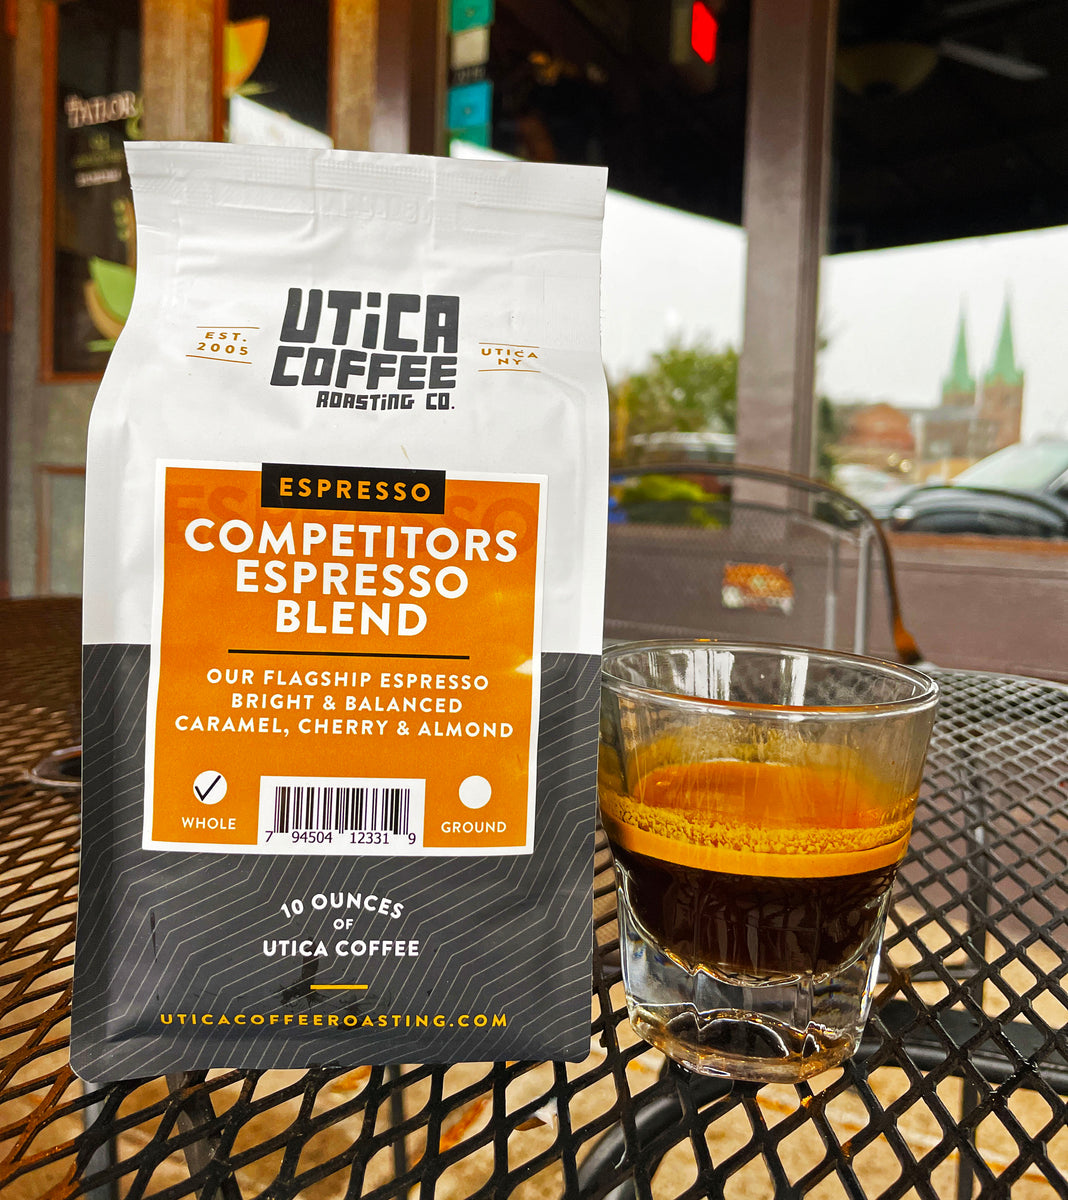 Utica Grind Crushed Red Pepper by Avico – Utica Coffee Roasting Co.